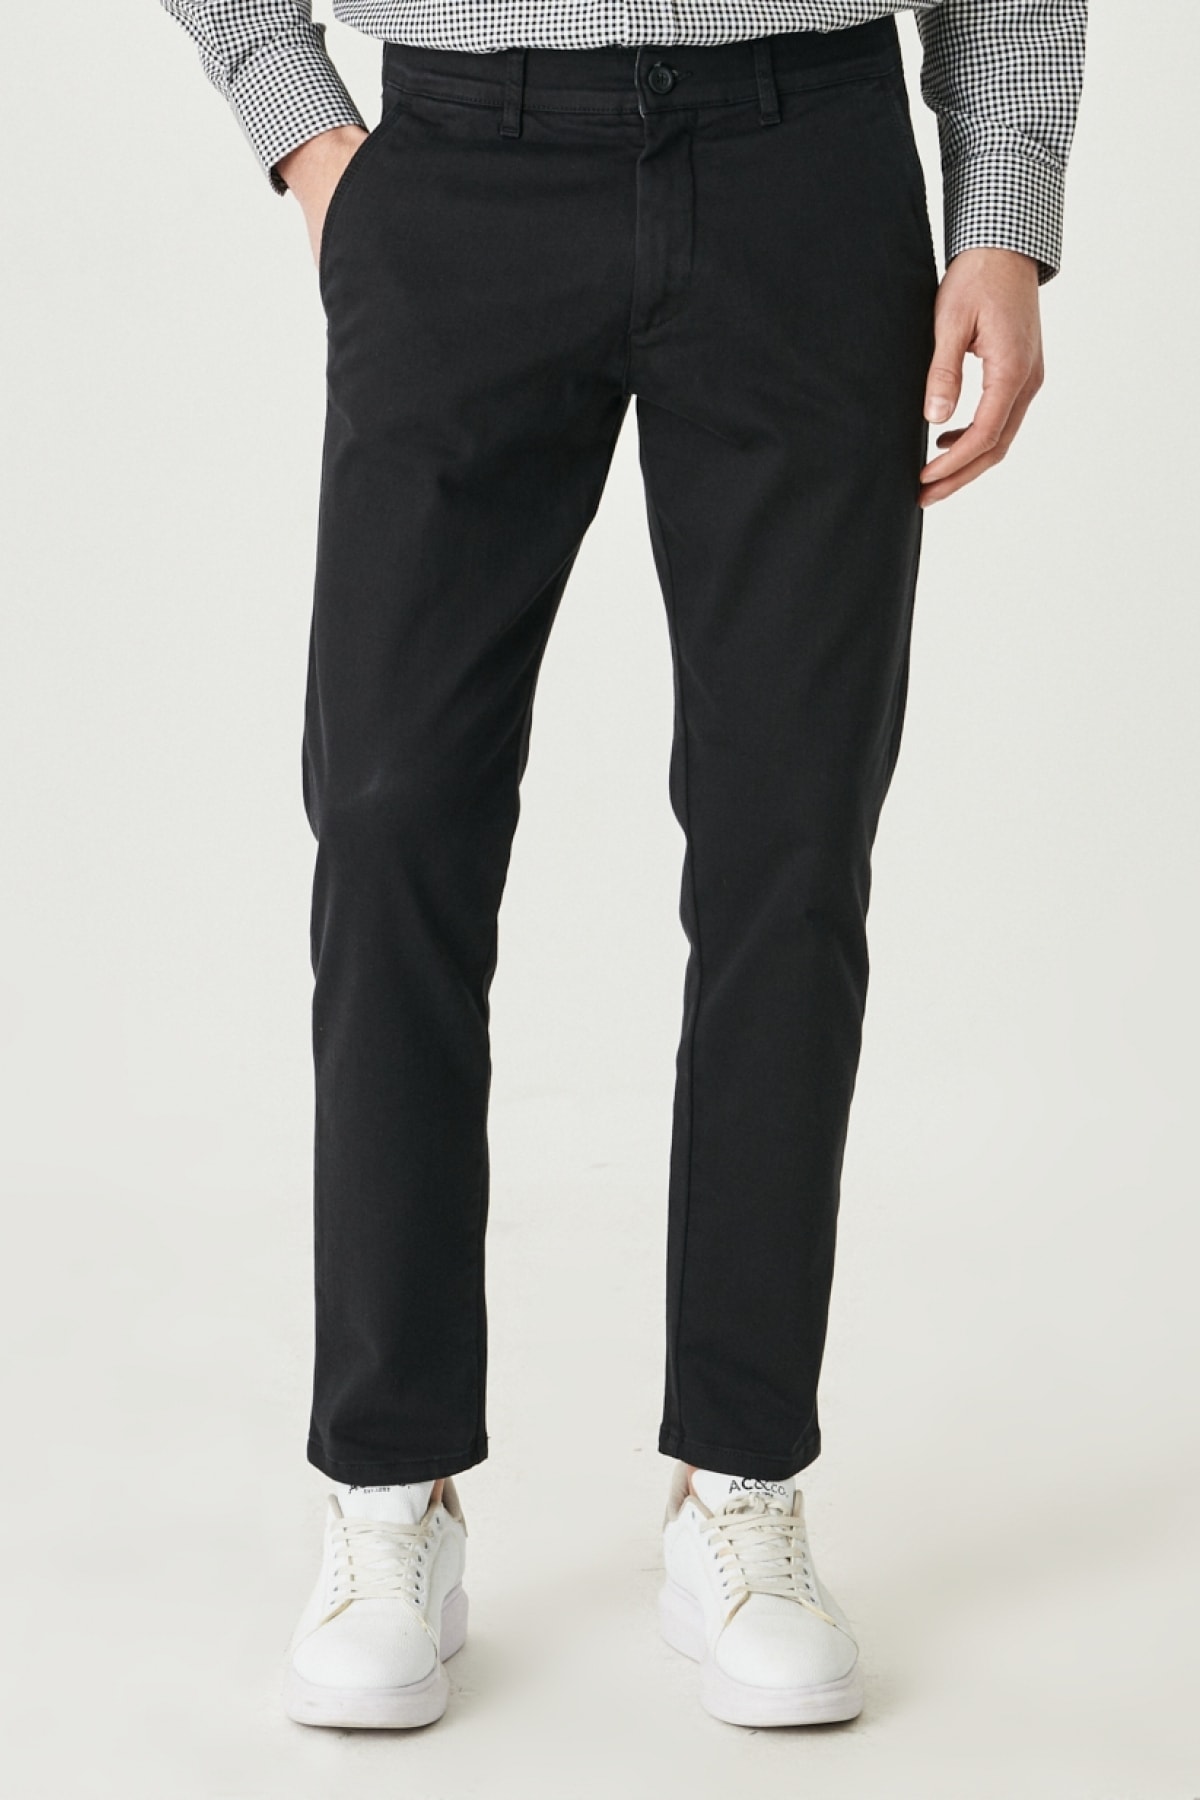 Levně ALTINYILDIZ CLASSICS Men's Black Comfort Fit 360 Degree Stretch All-Directional Side Pocket Trousers.